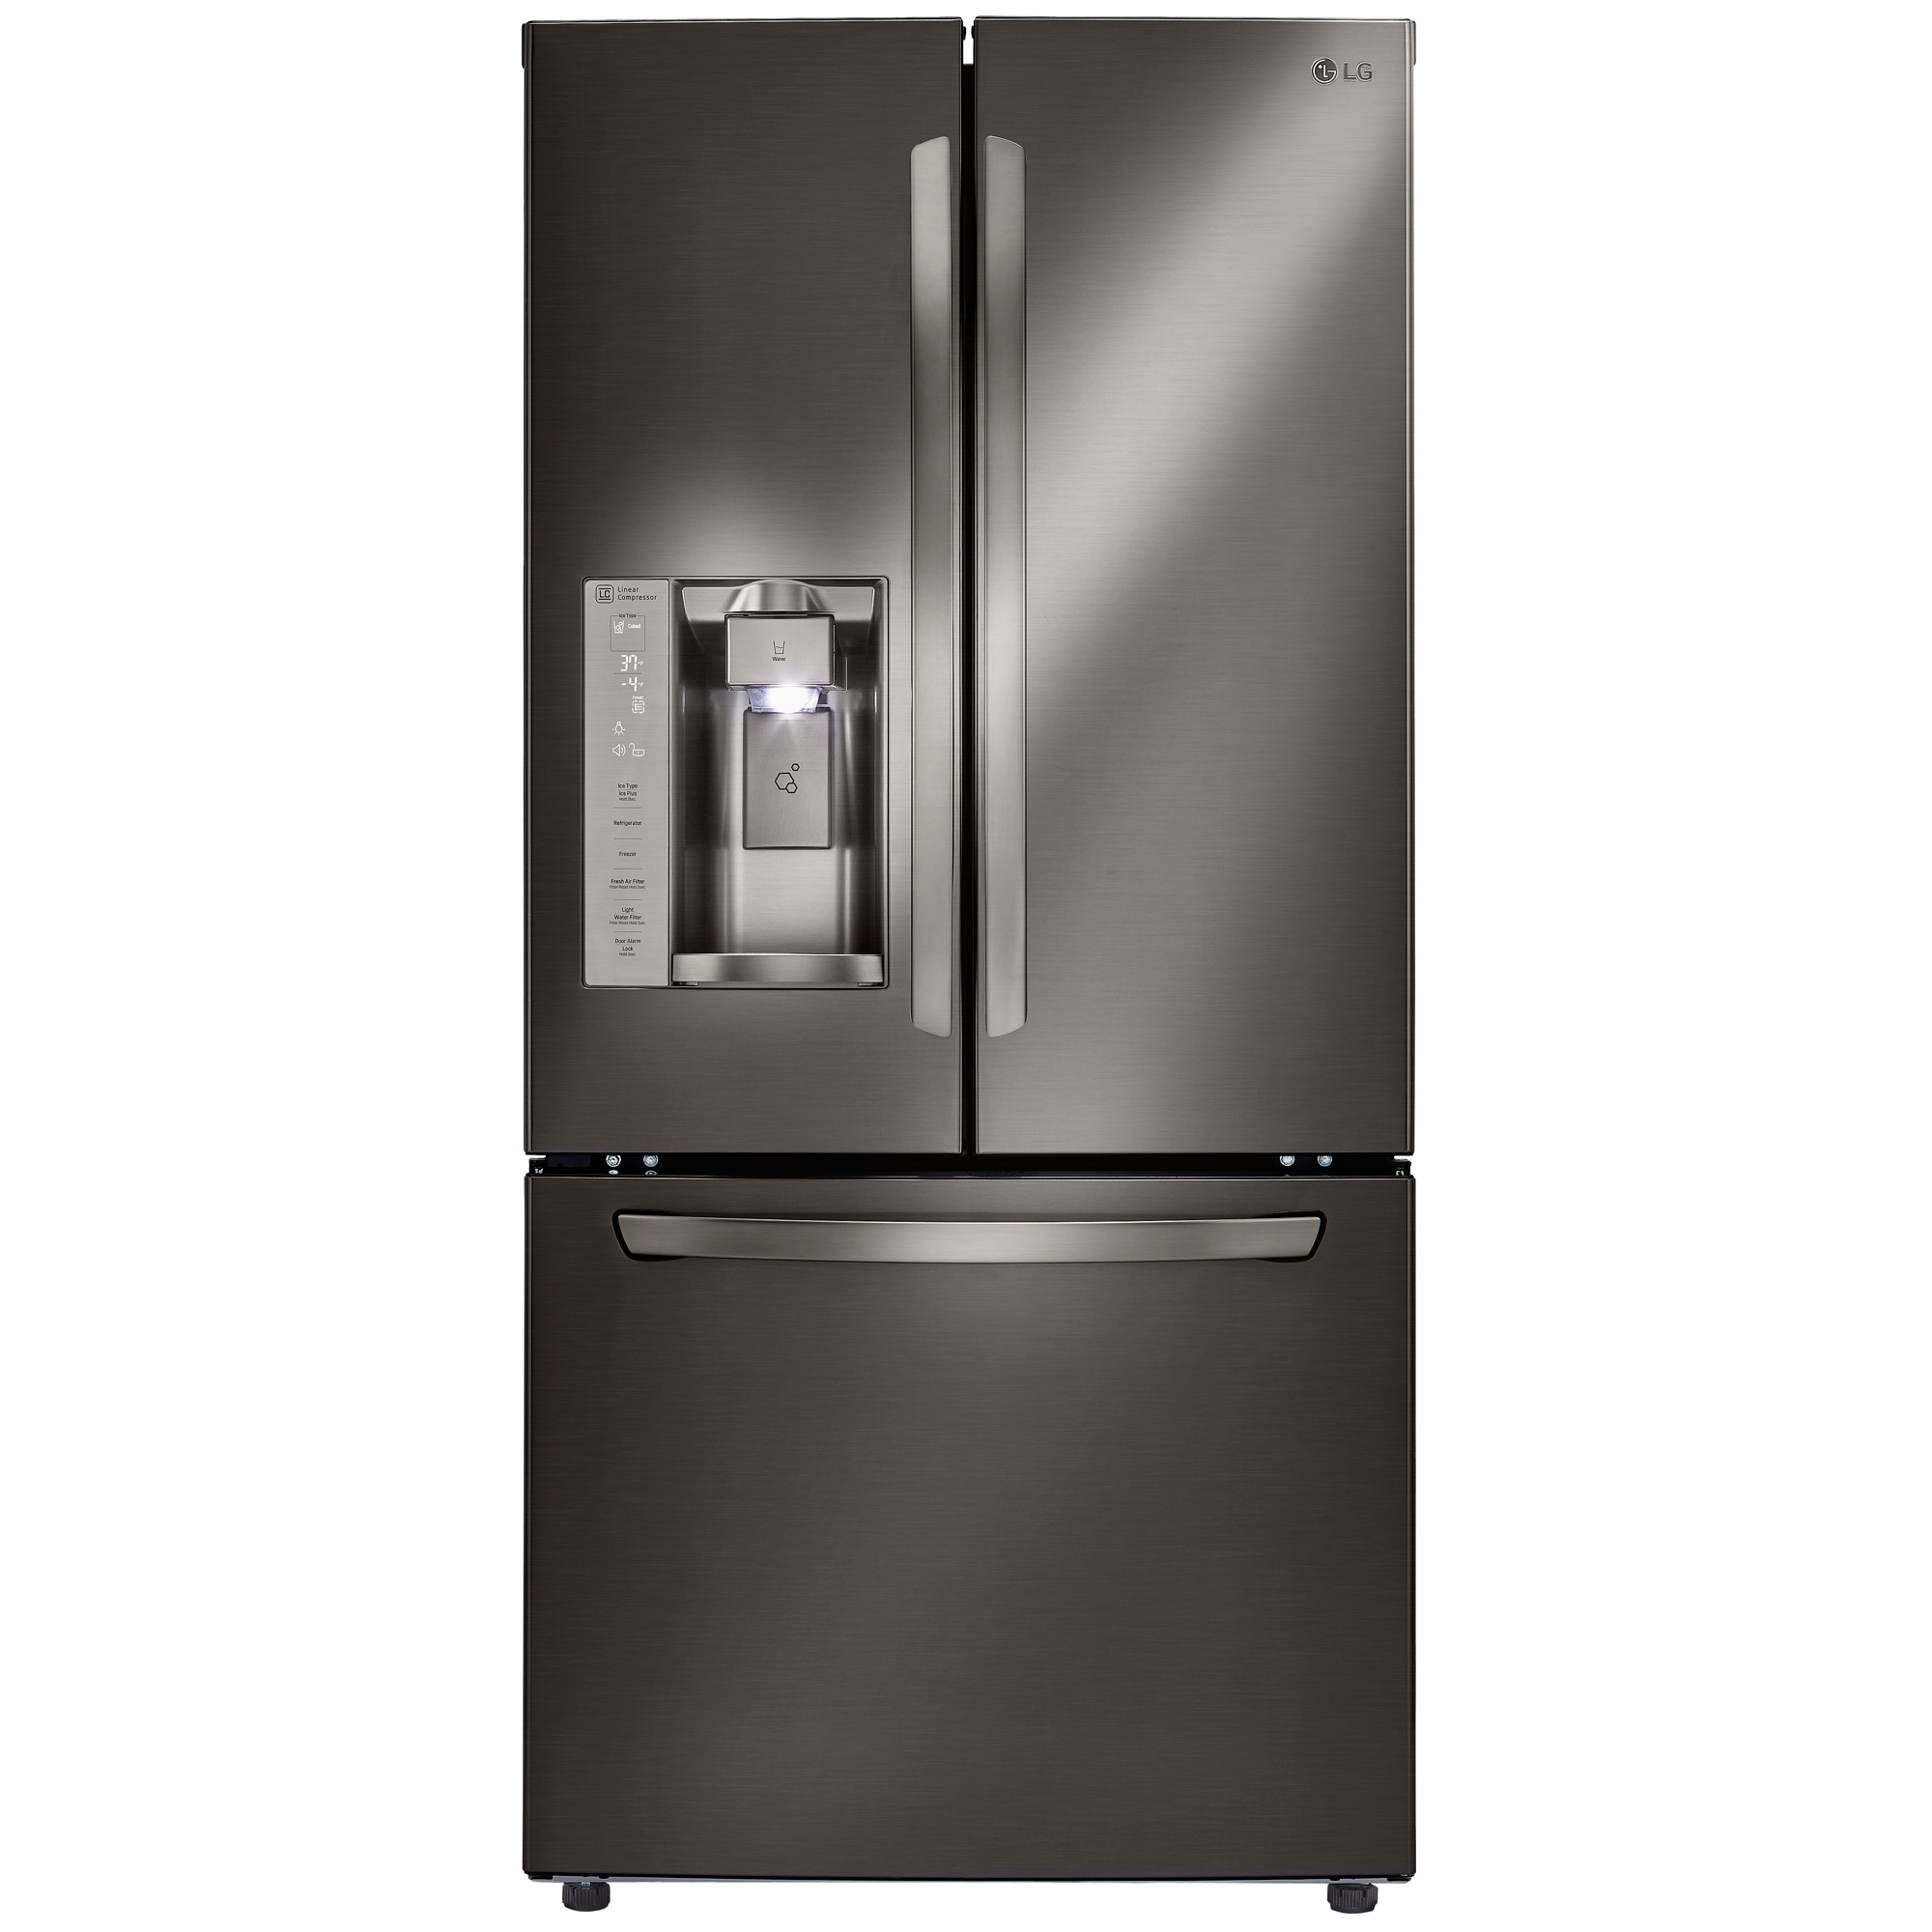 LG LFXS24623D 24.2 Cu. Ft. 33" Wide French Door Refrigerator w/ Ice 33 Inch Wide Black Stainless Steel Refrigerator